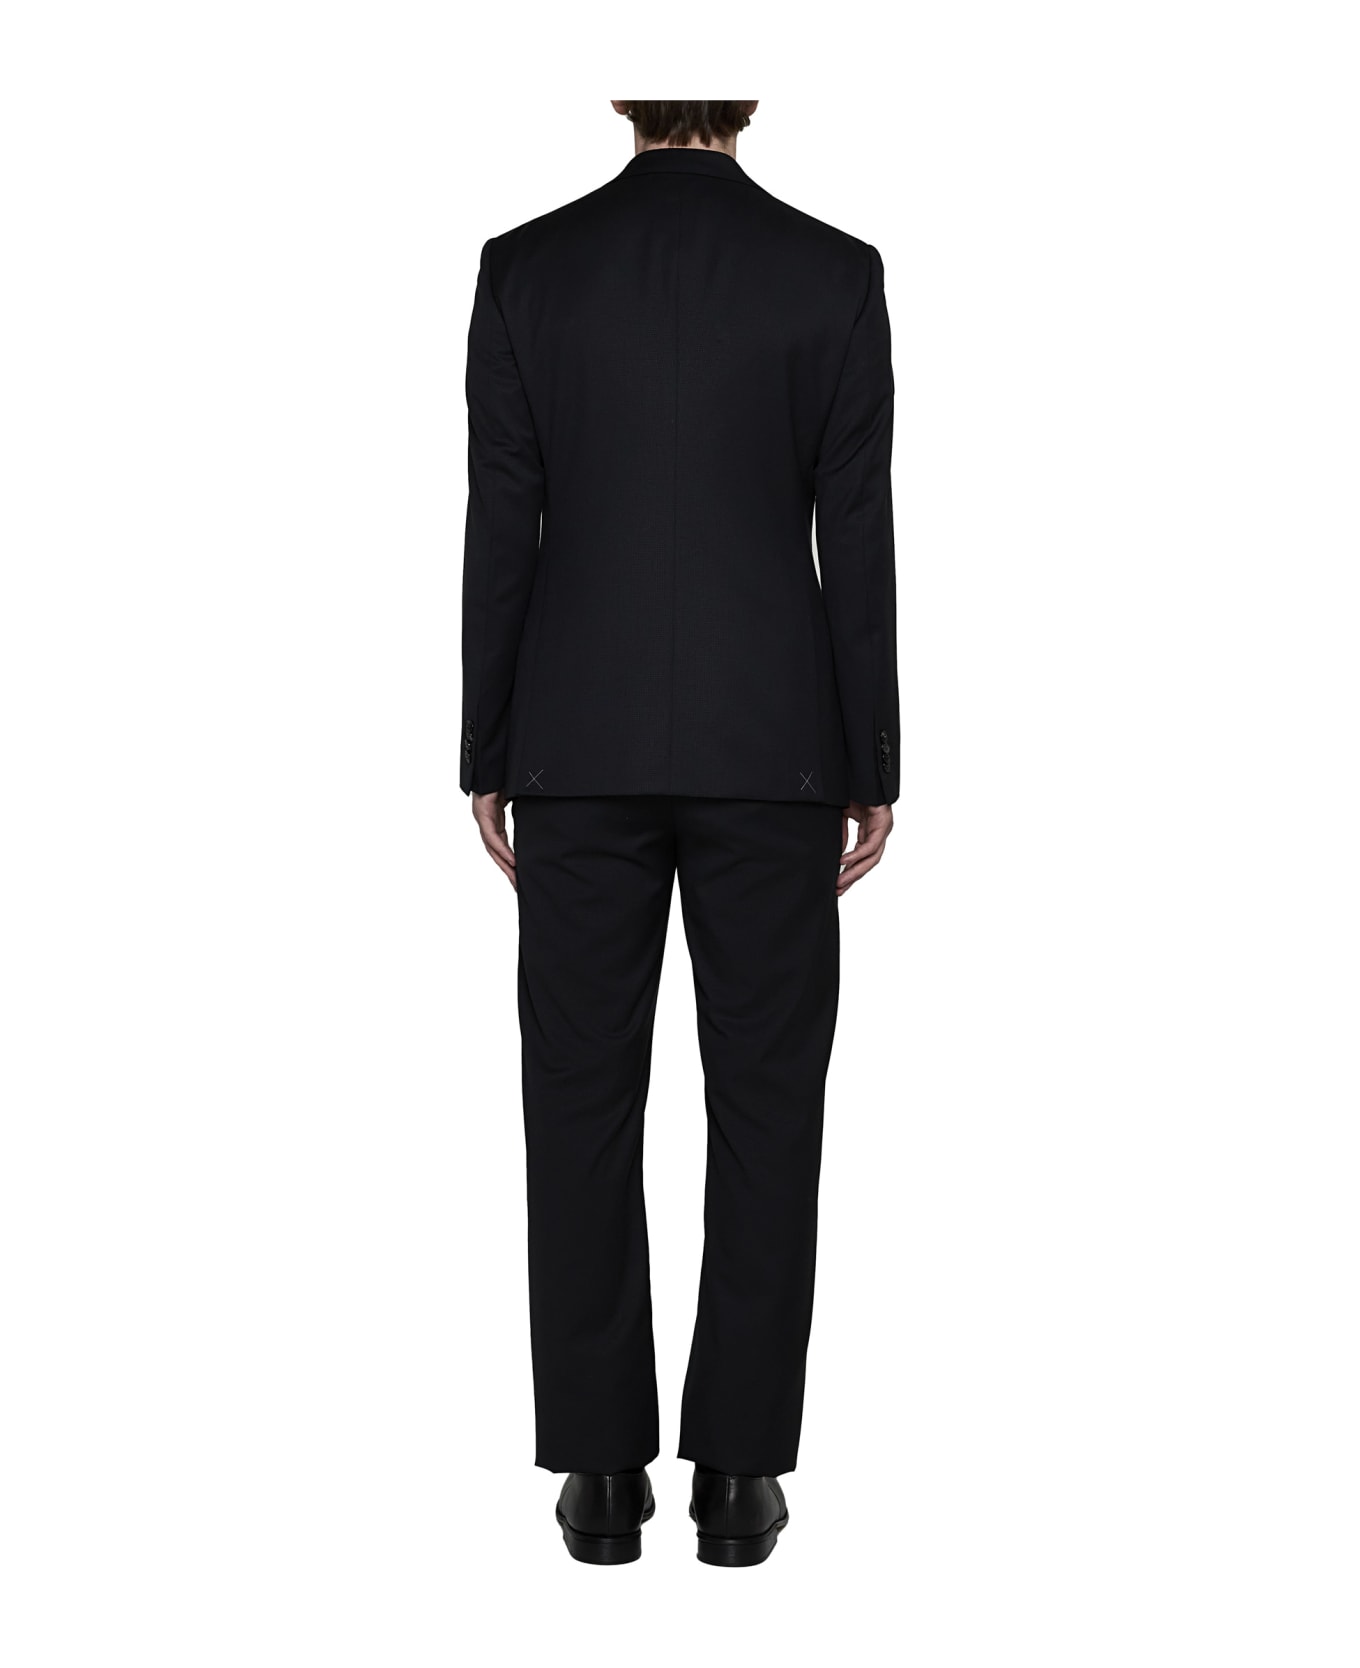 Giorgio Armani Suit - Black beauty スーツ